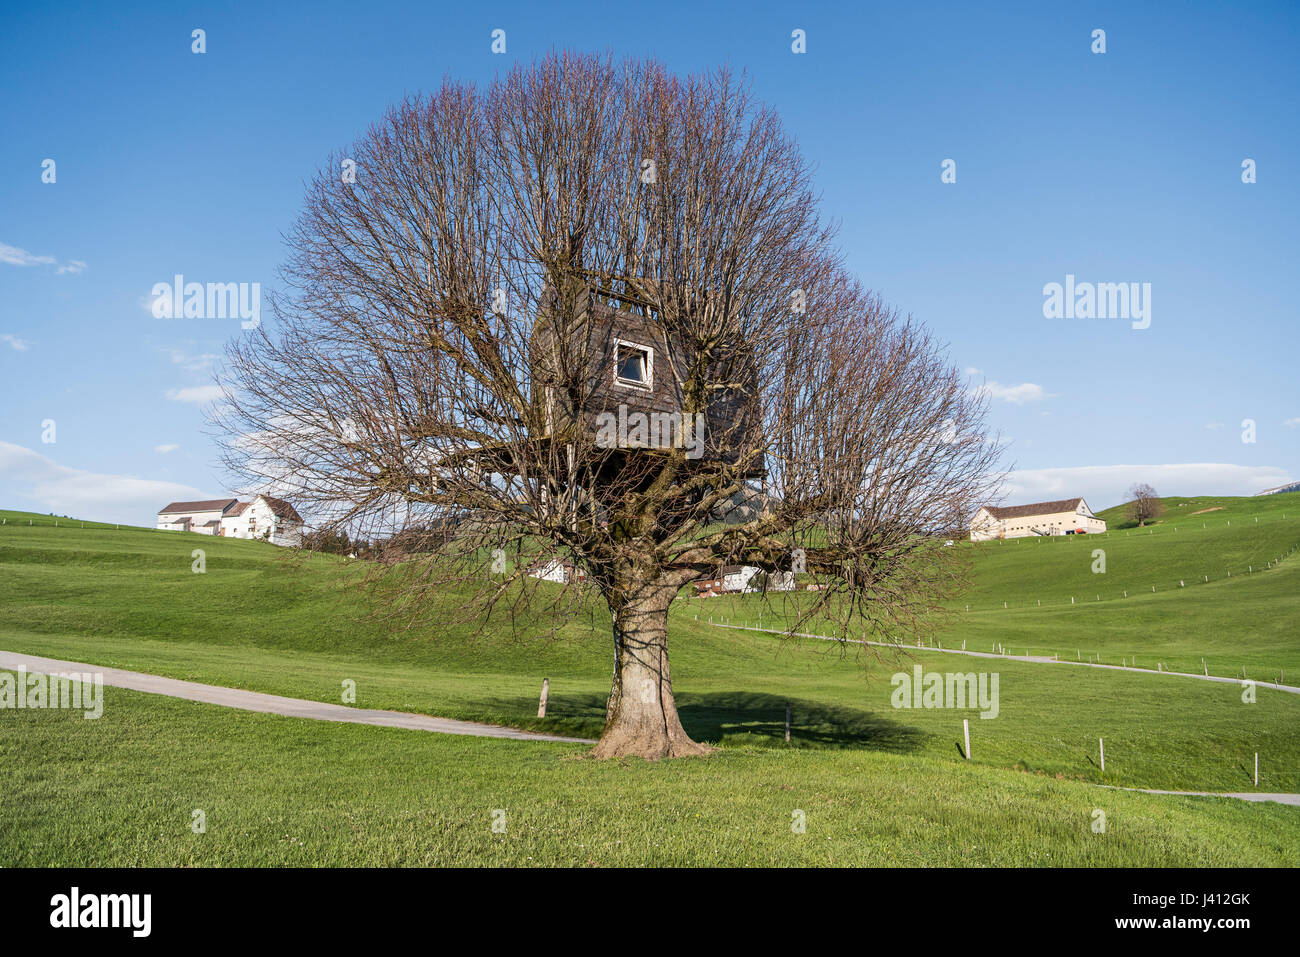 A children's play house built into a tree on farmland near the Swiss town of Apenzell, Switzerland. Derek Hudson / Alamy Stock Photo Stock Photo